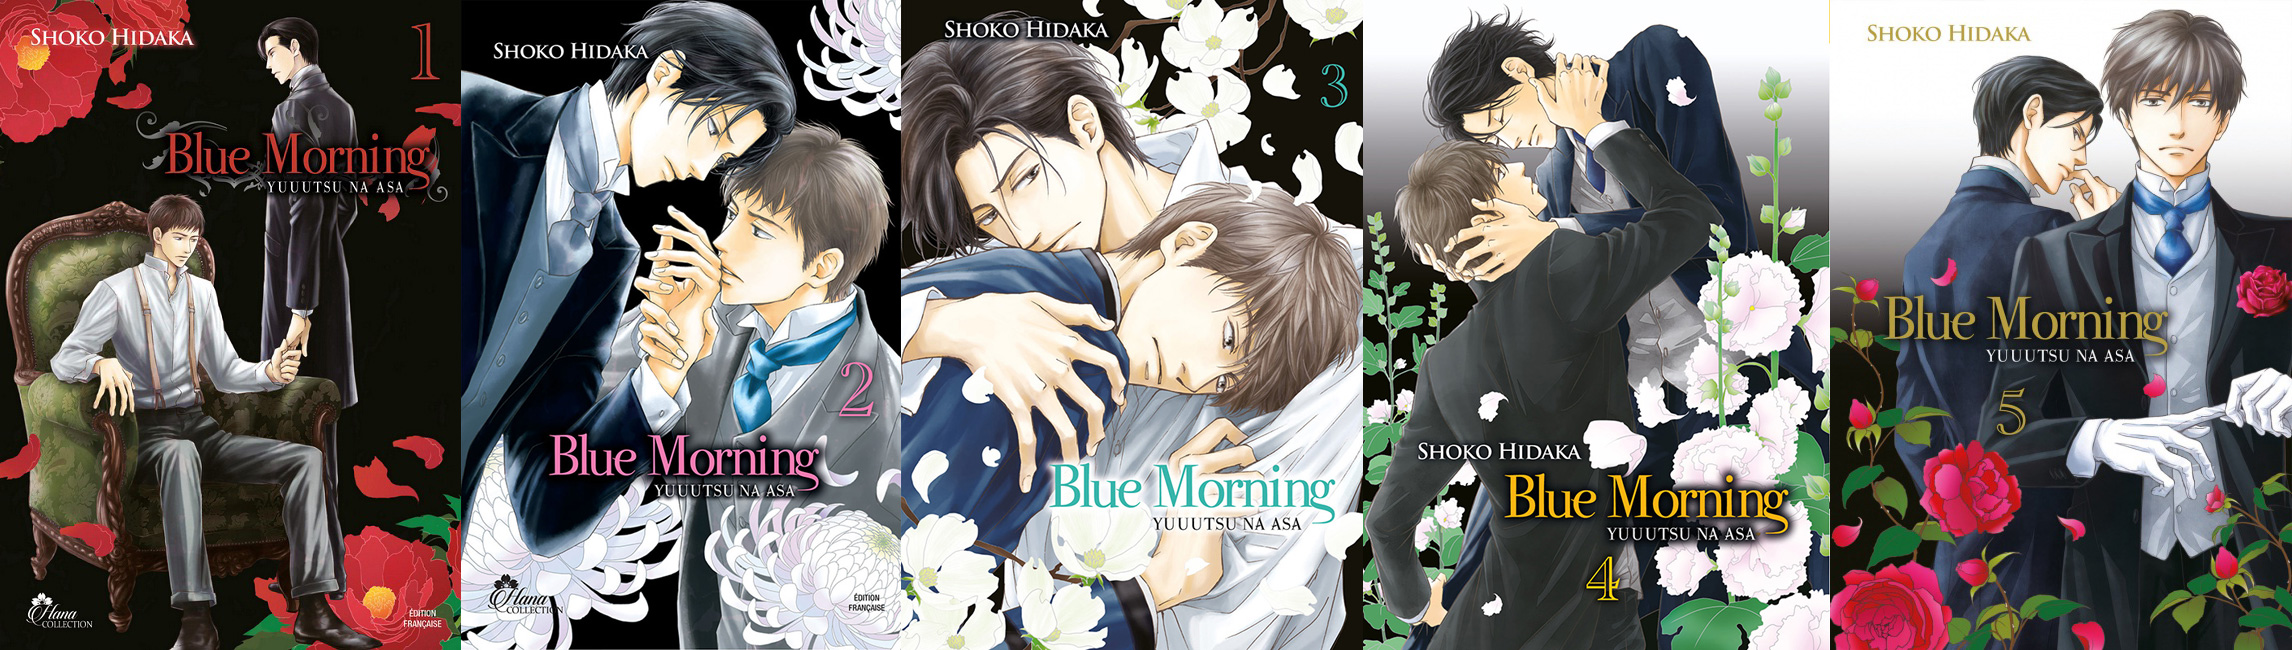 blue-morning-idp1-5